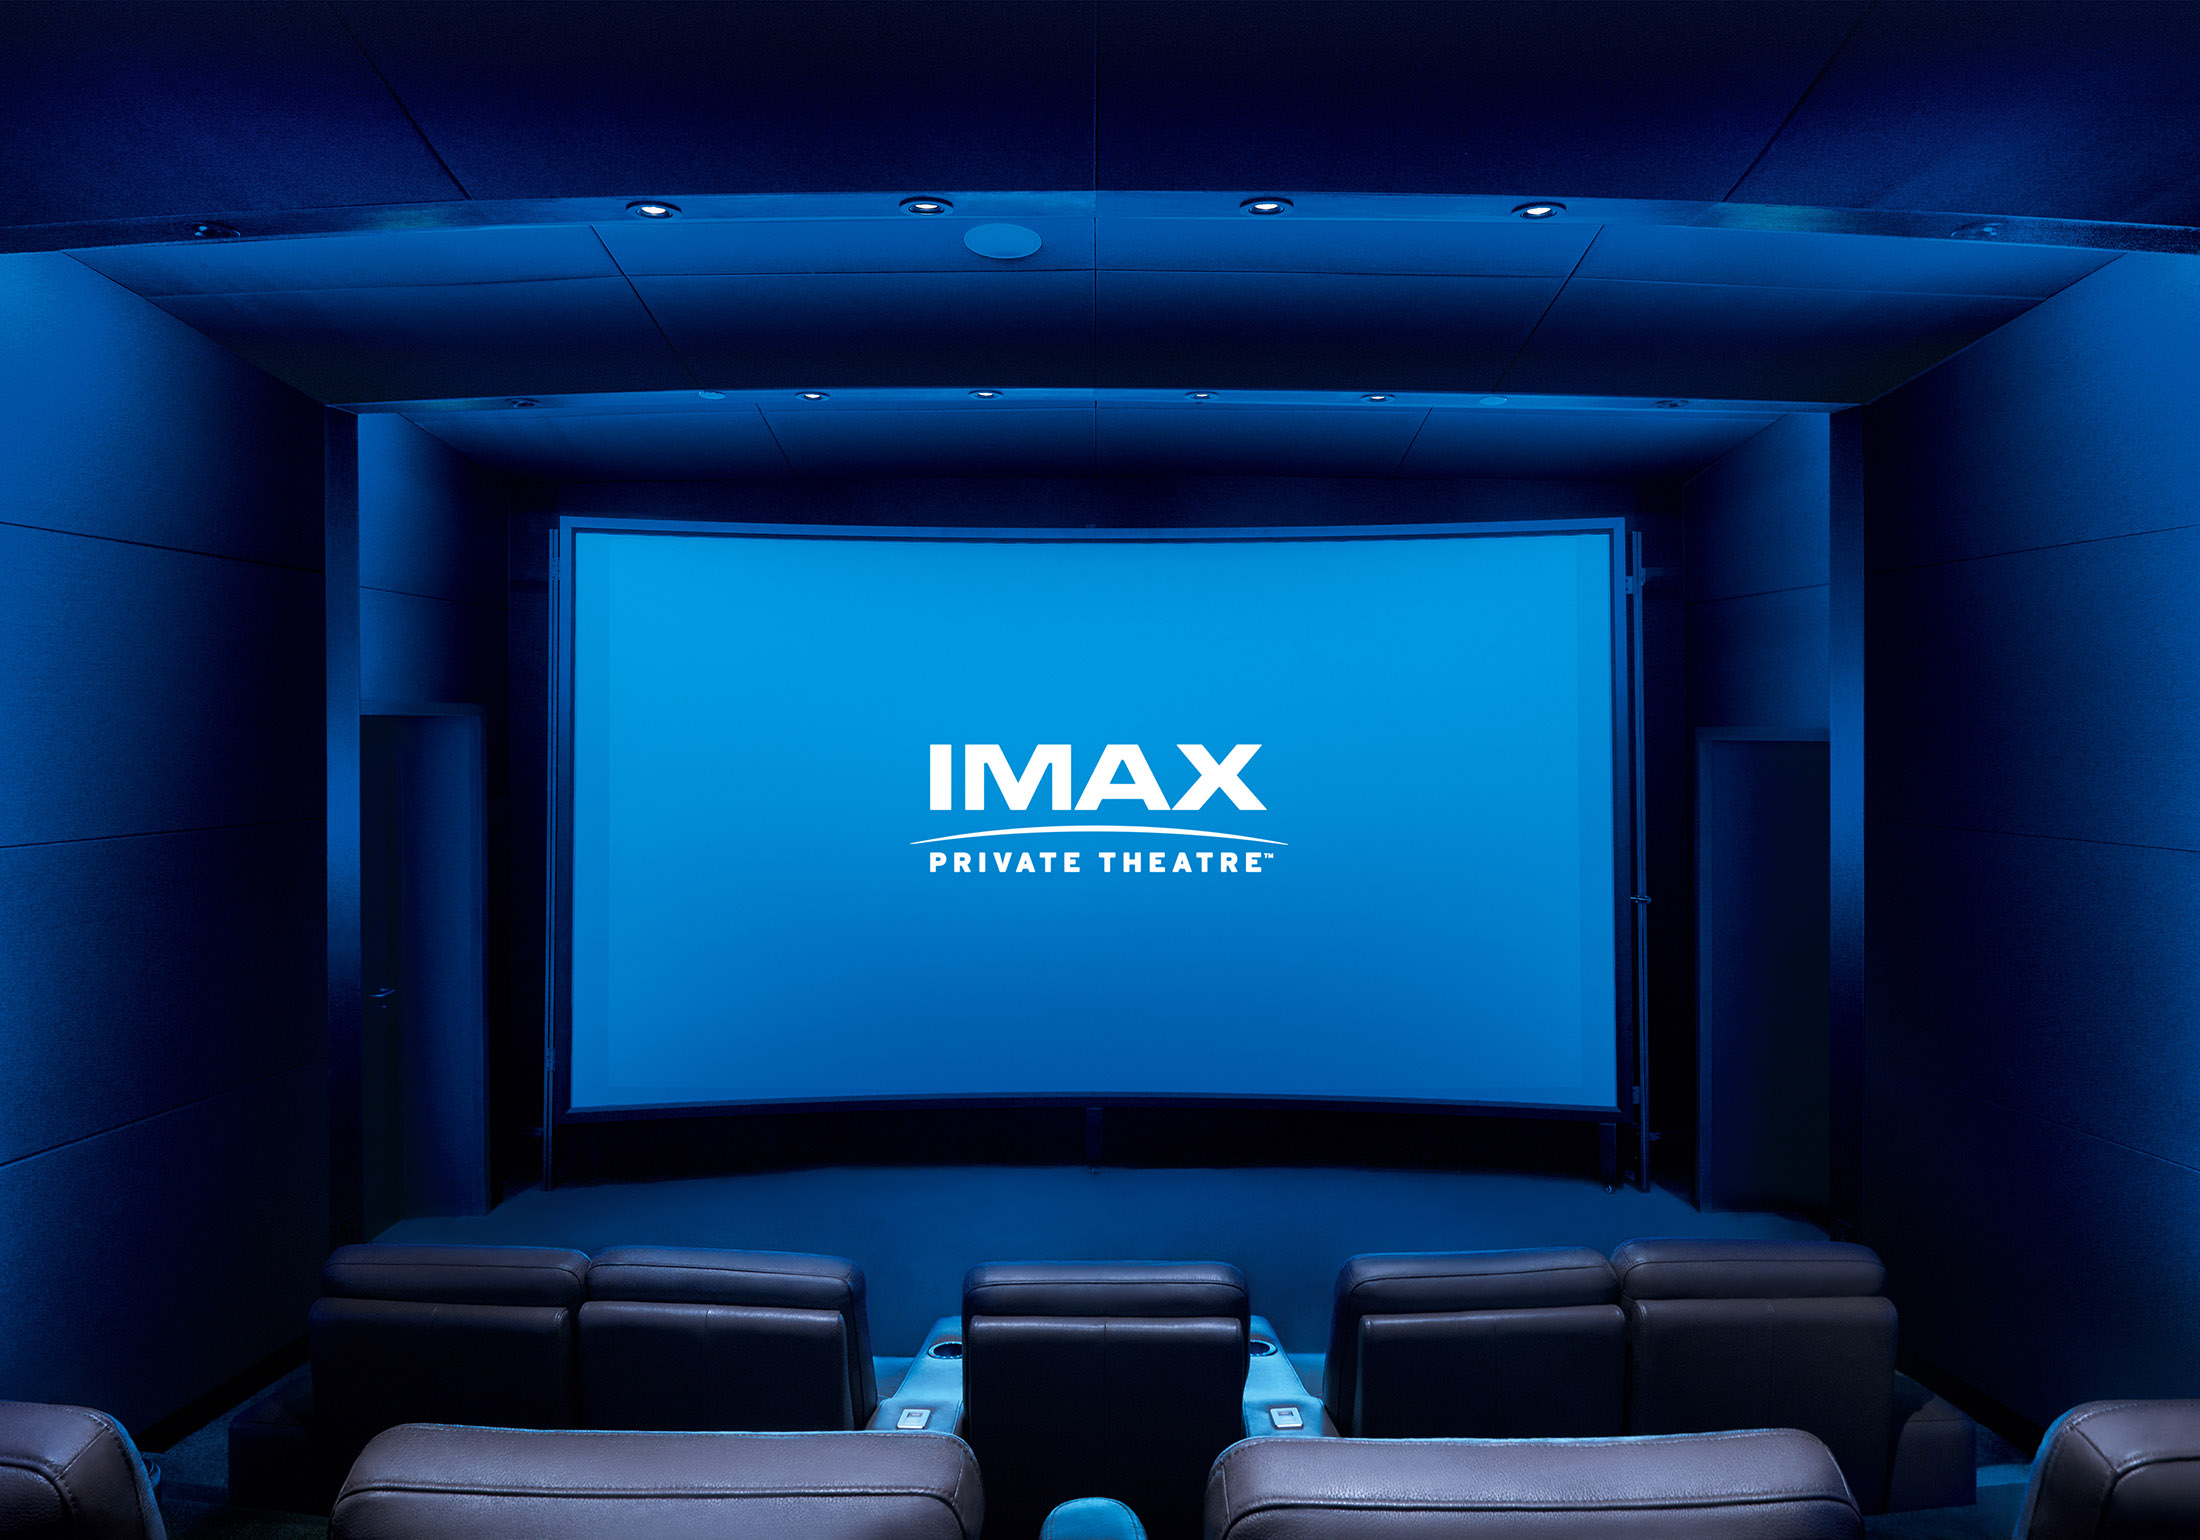 Kinoteatr. IMAX экран. Кинозал IMAX. Большой экран в кинотеатре. Экран в IMAX кинотеатре.